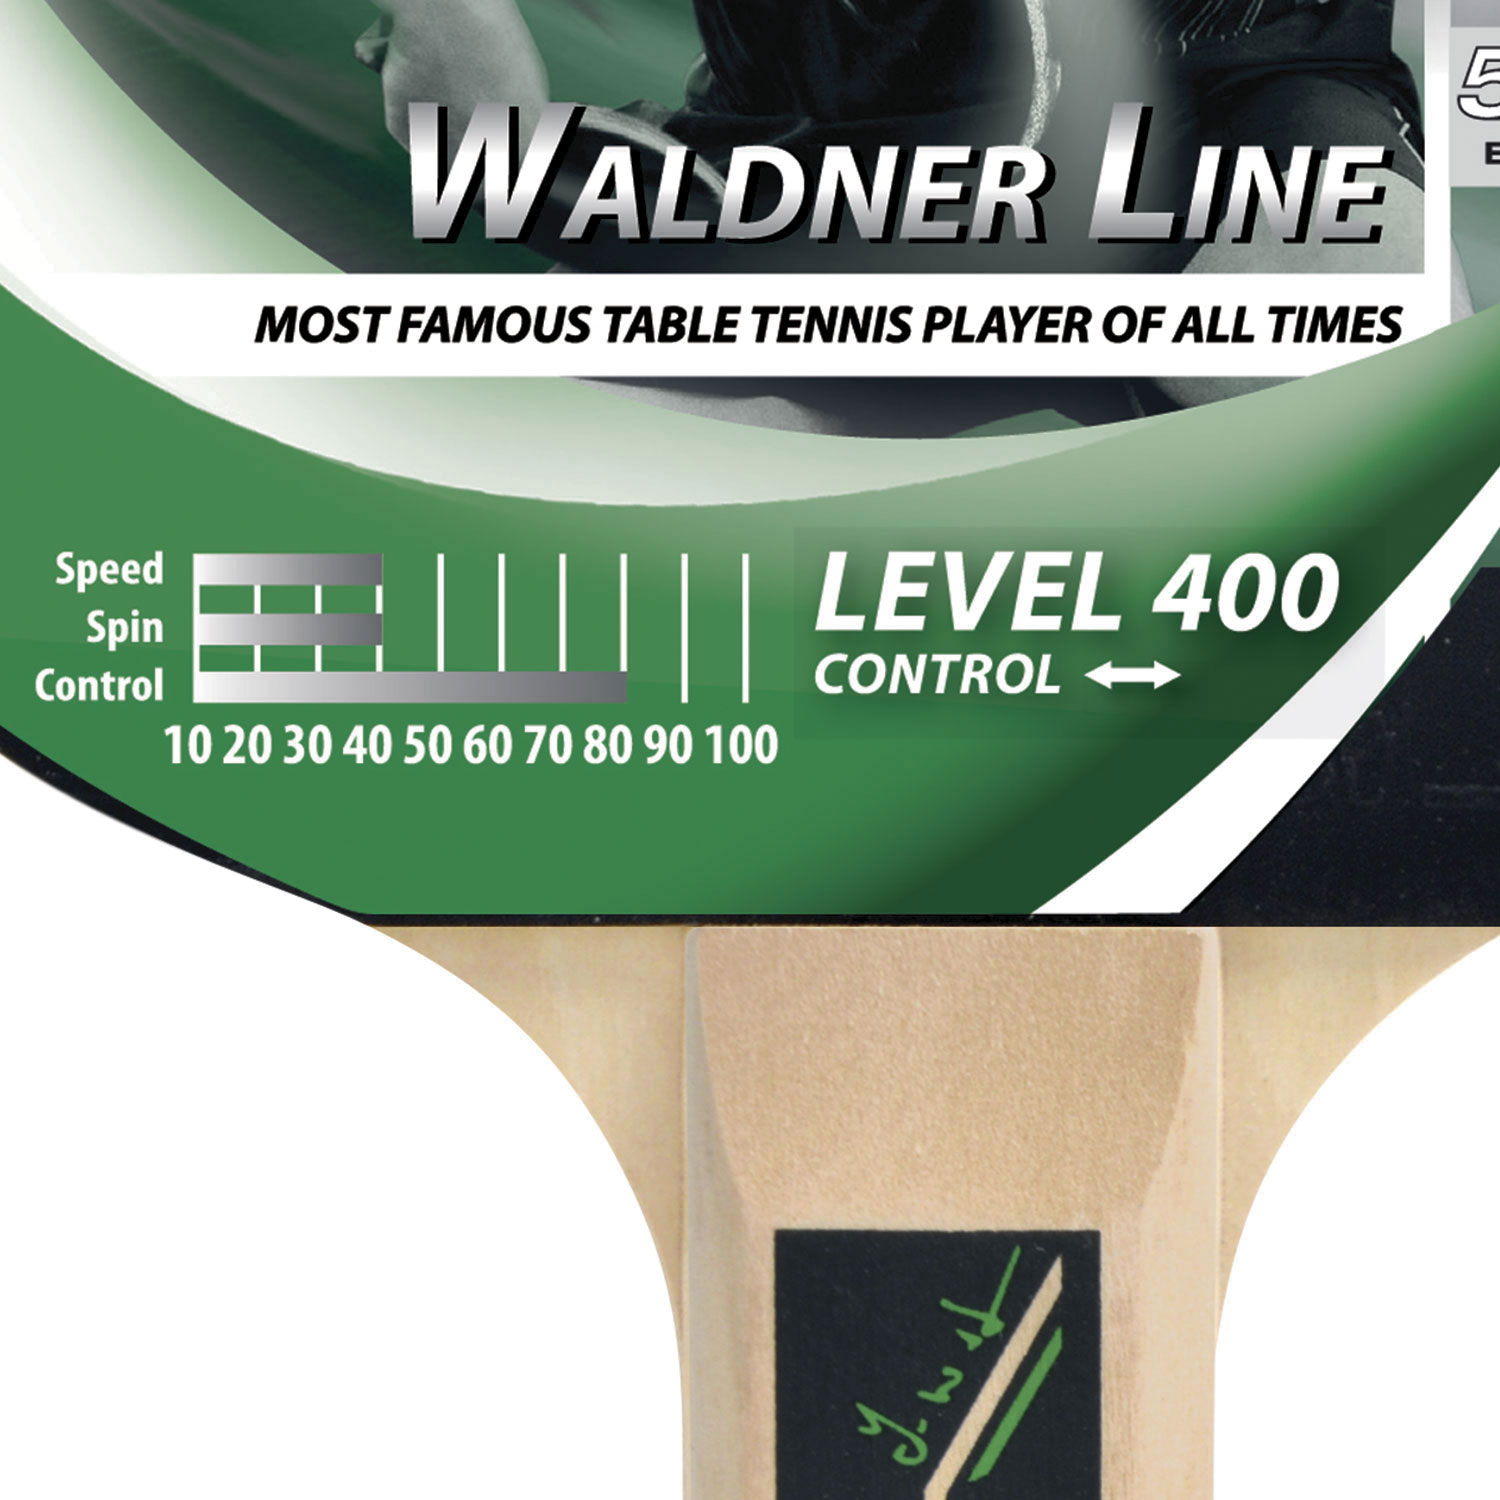 Набор для настольного тенниса Donic Waldner 400 1 ракетка 3 мячика Elite 1 чехол - фото 5